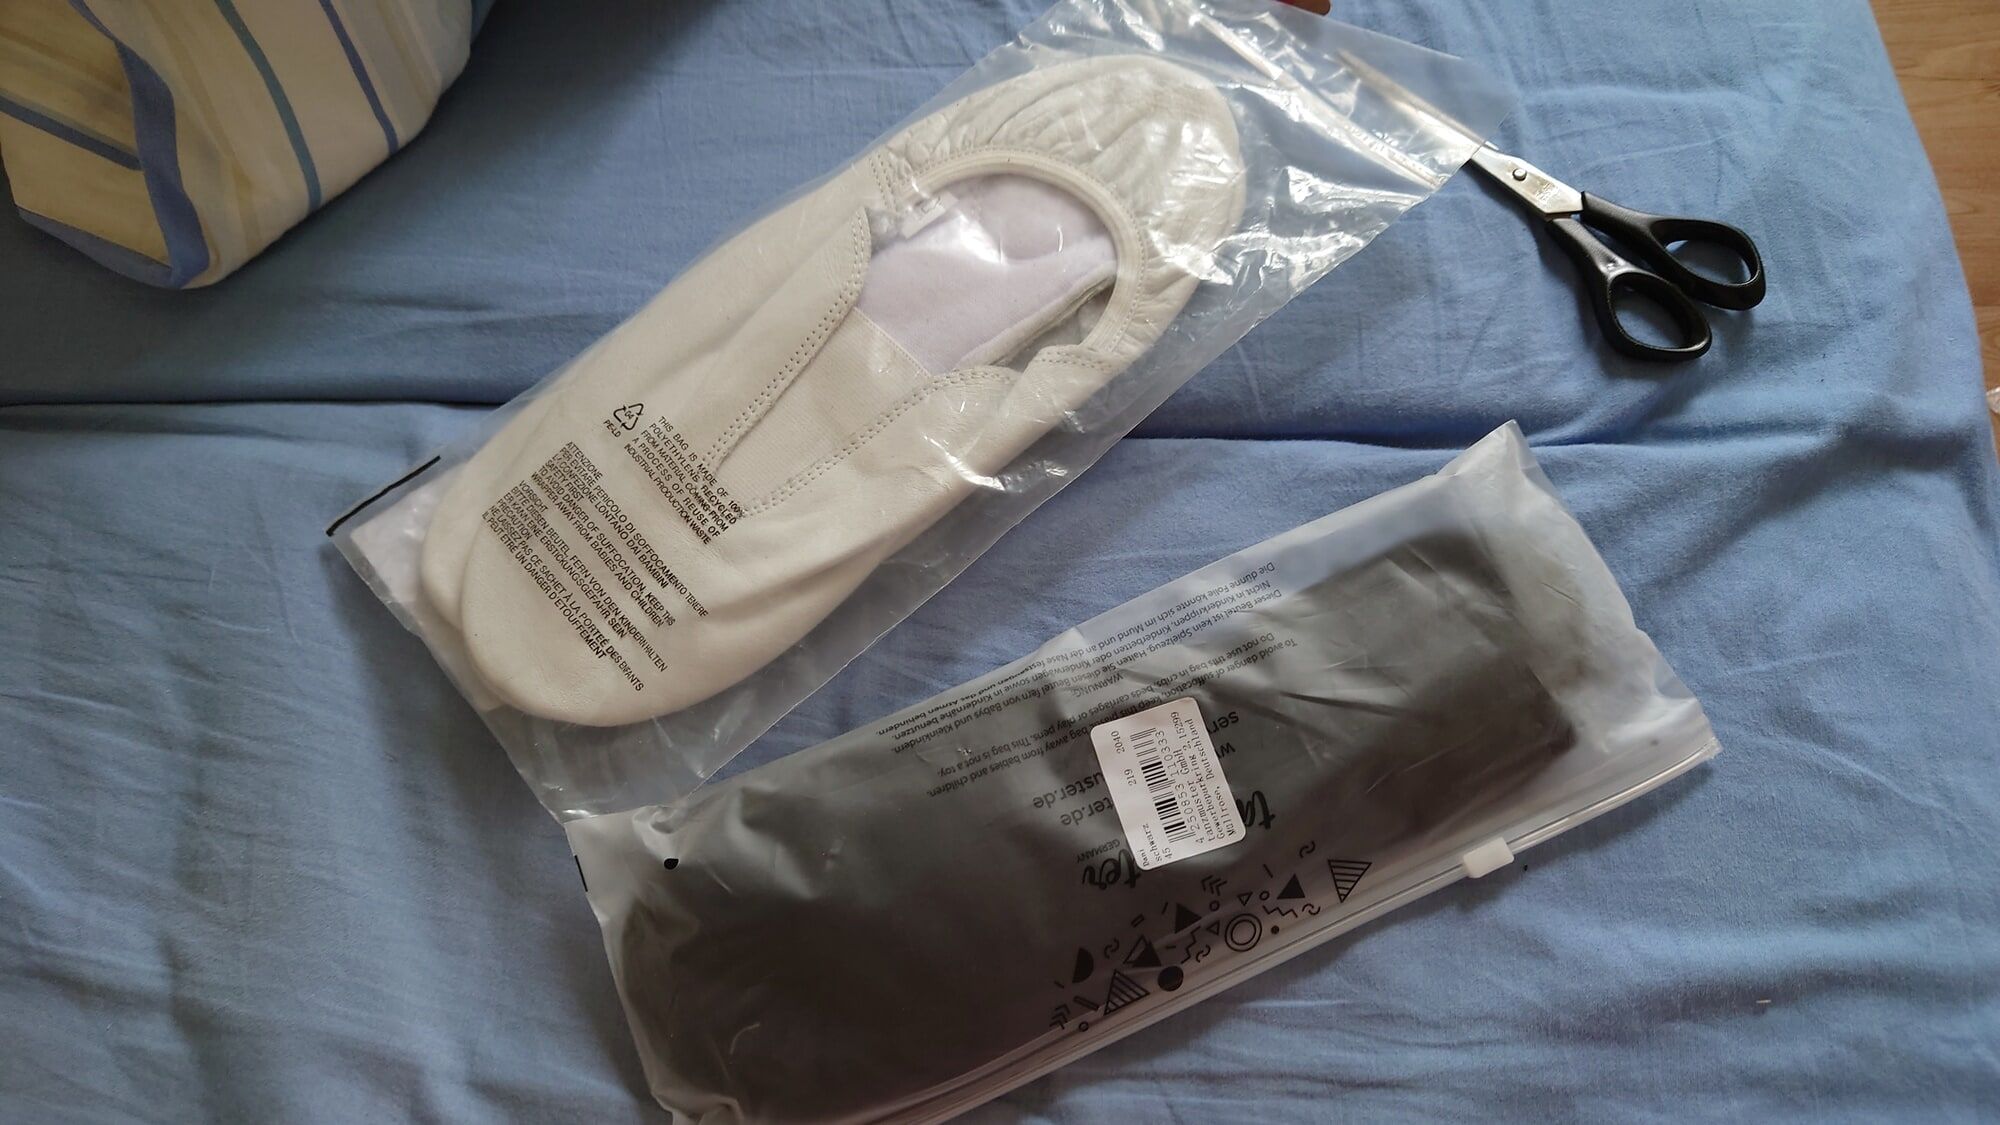 Borrowed slippers for gymnastics #3